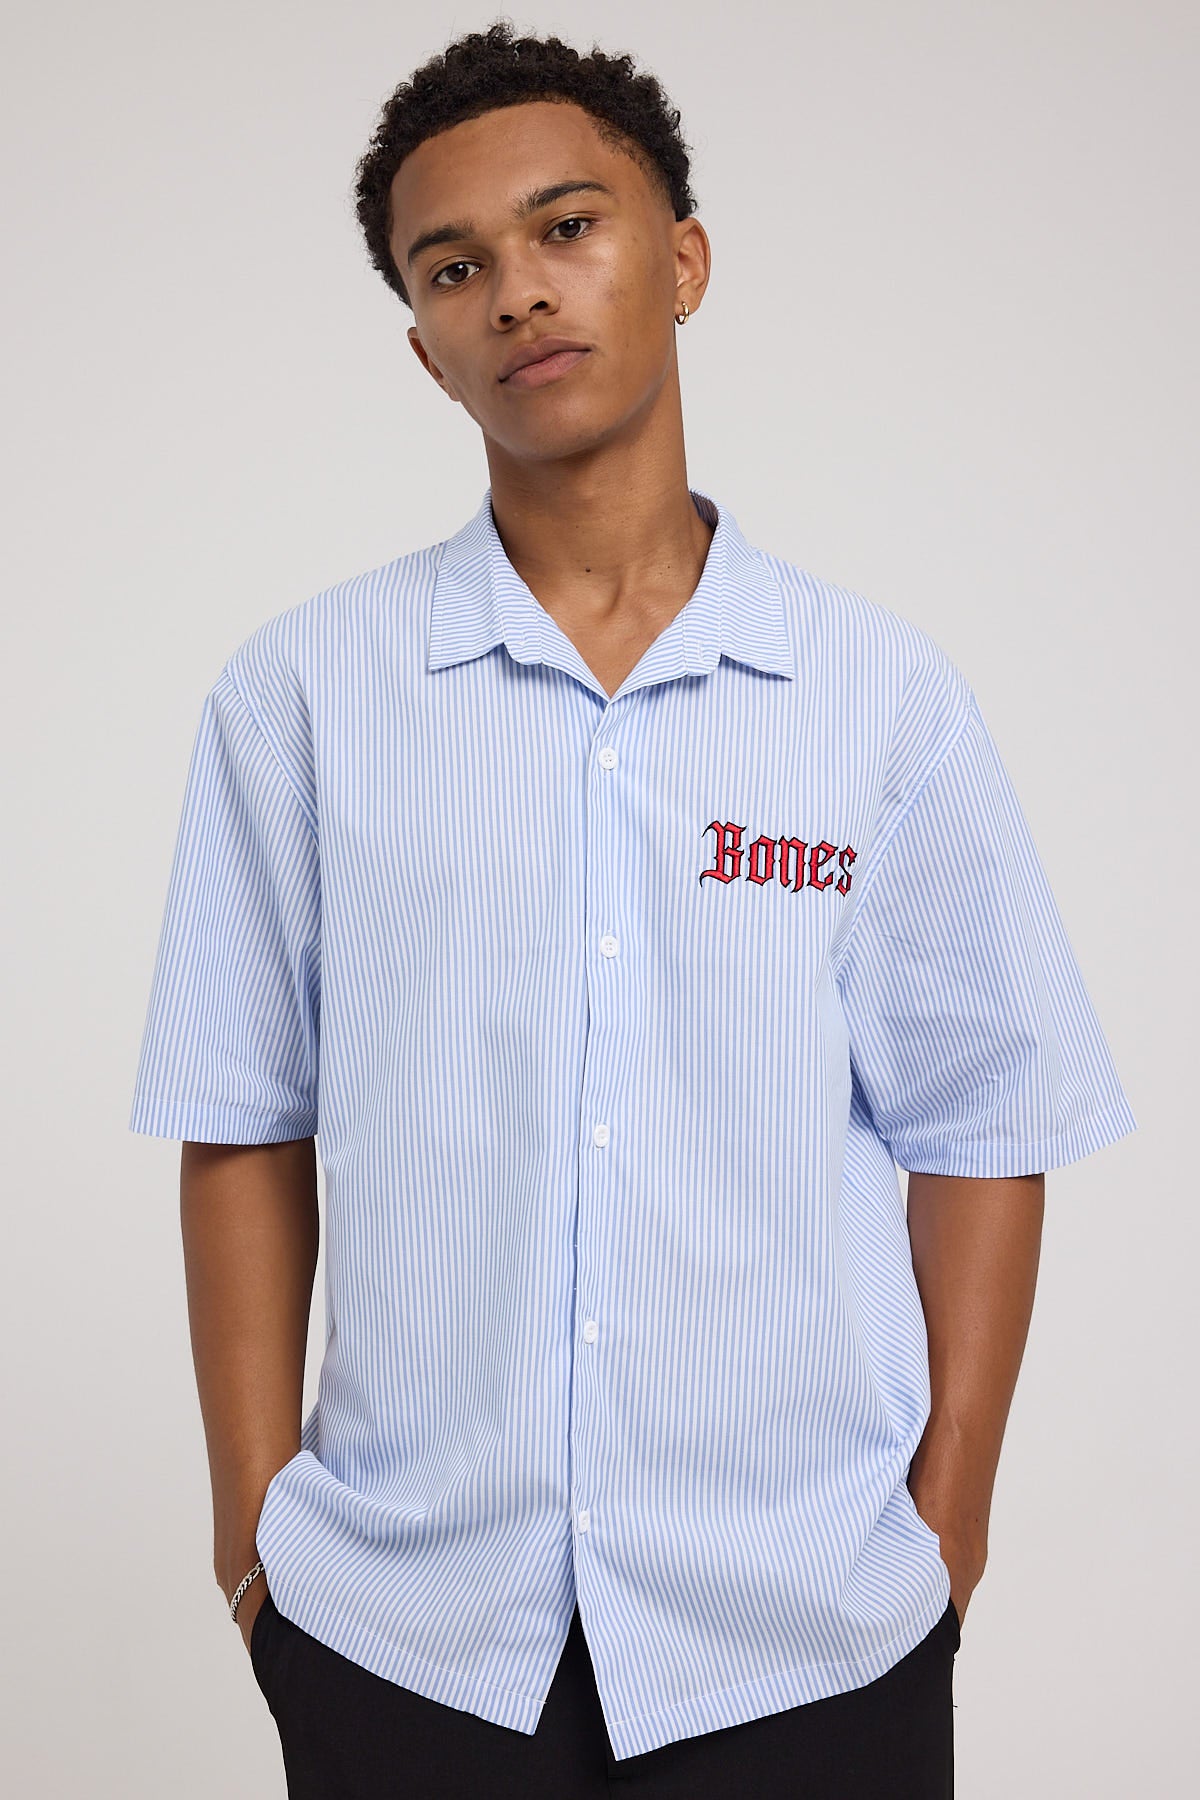 Billy Bones Club Bones Gothic Striped Shirt Blue/White